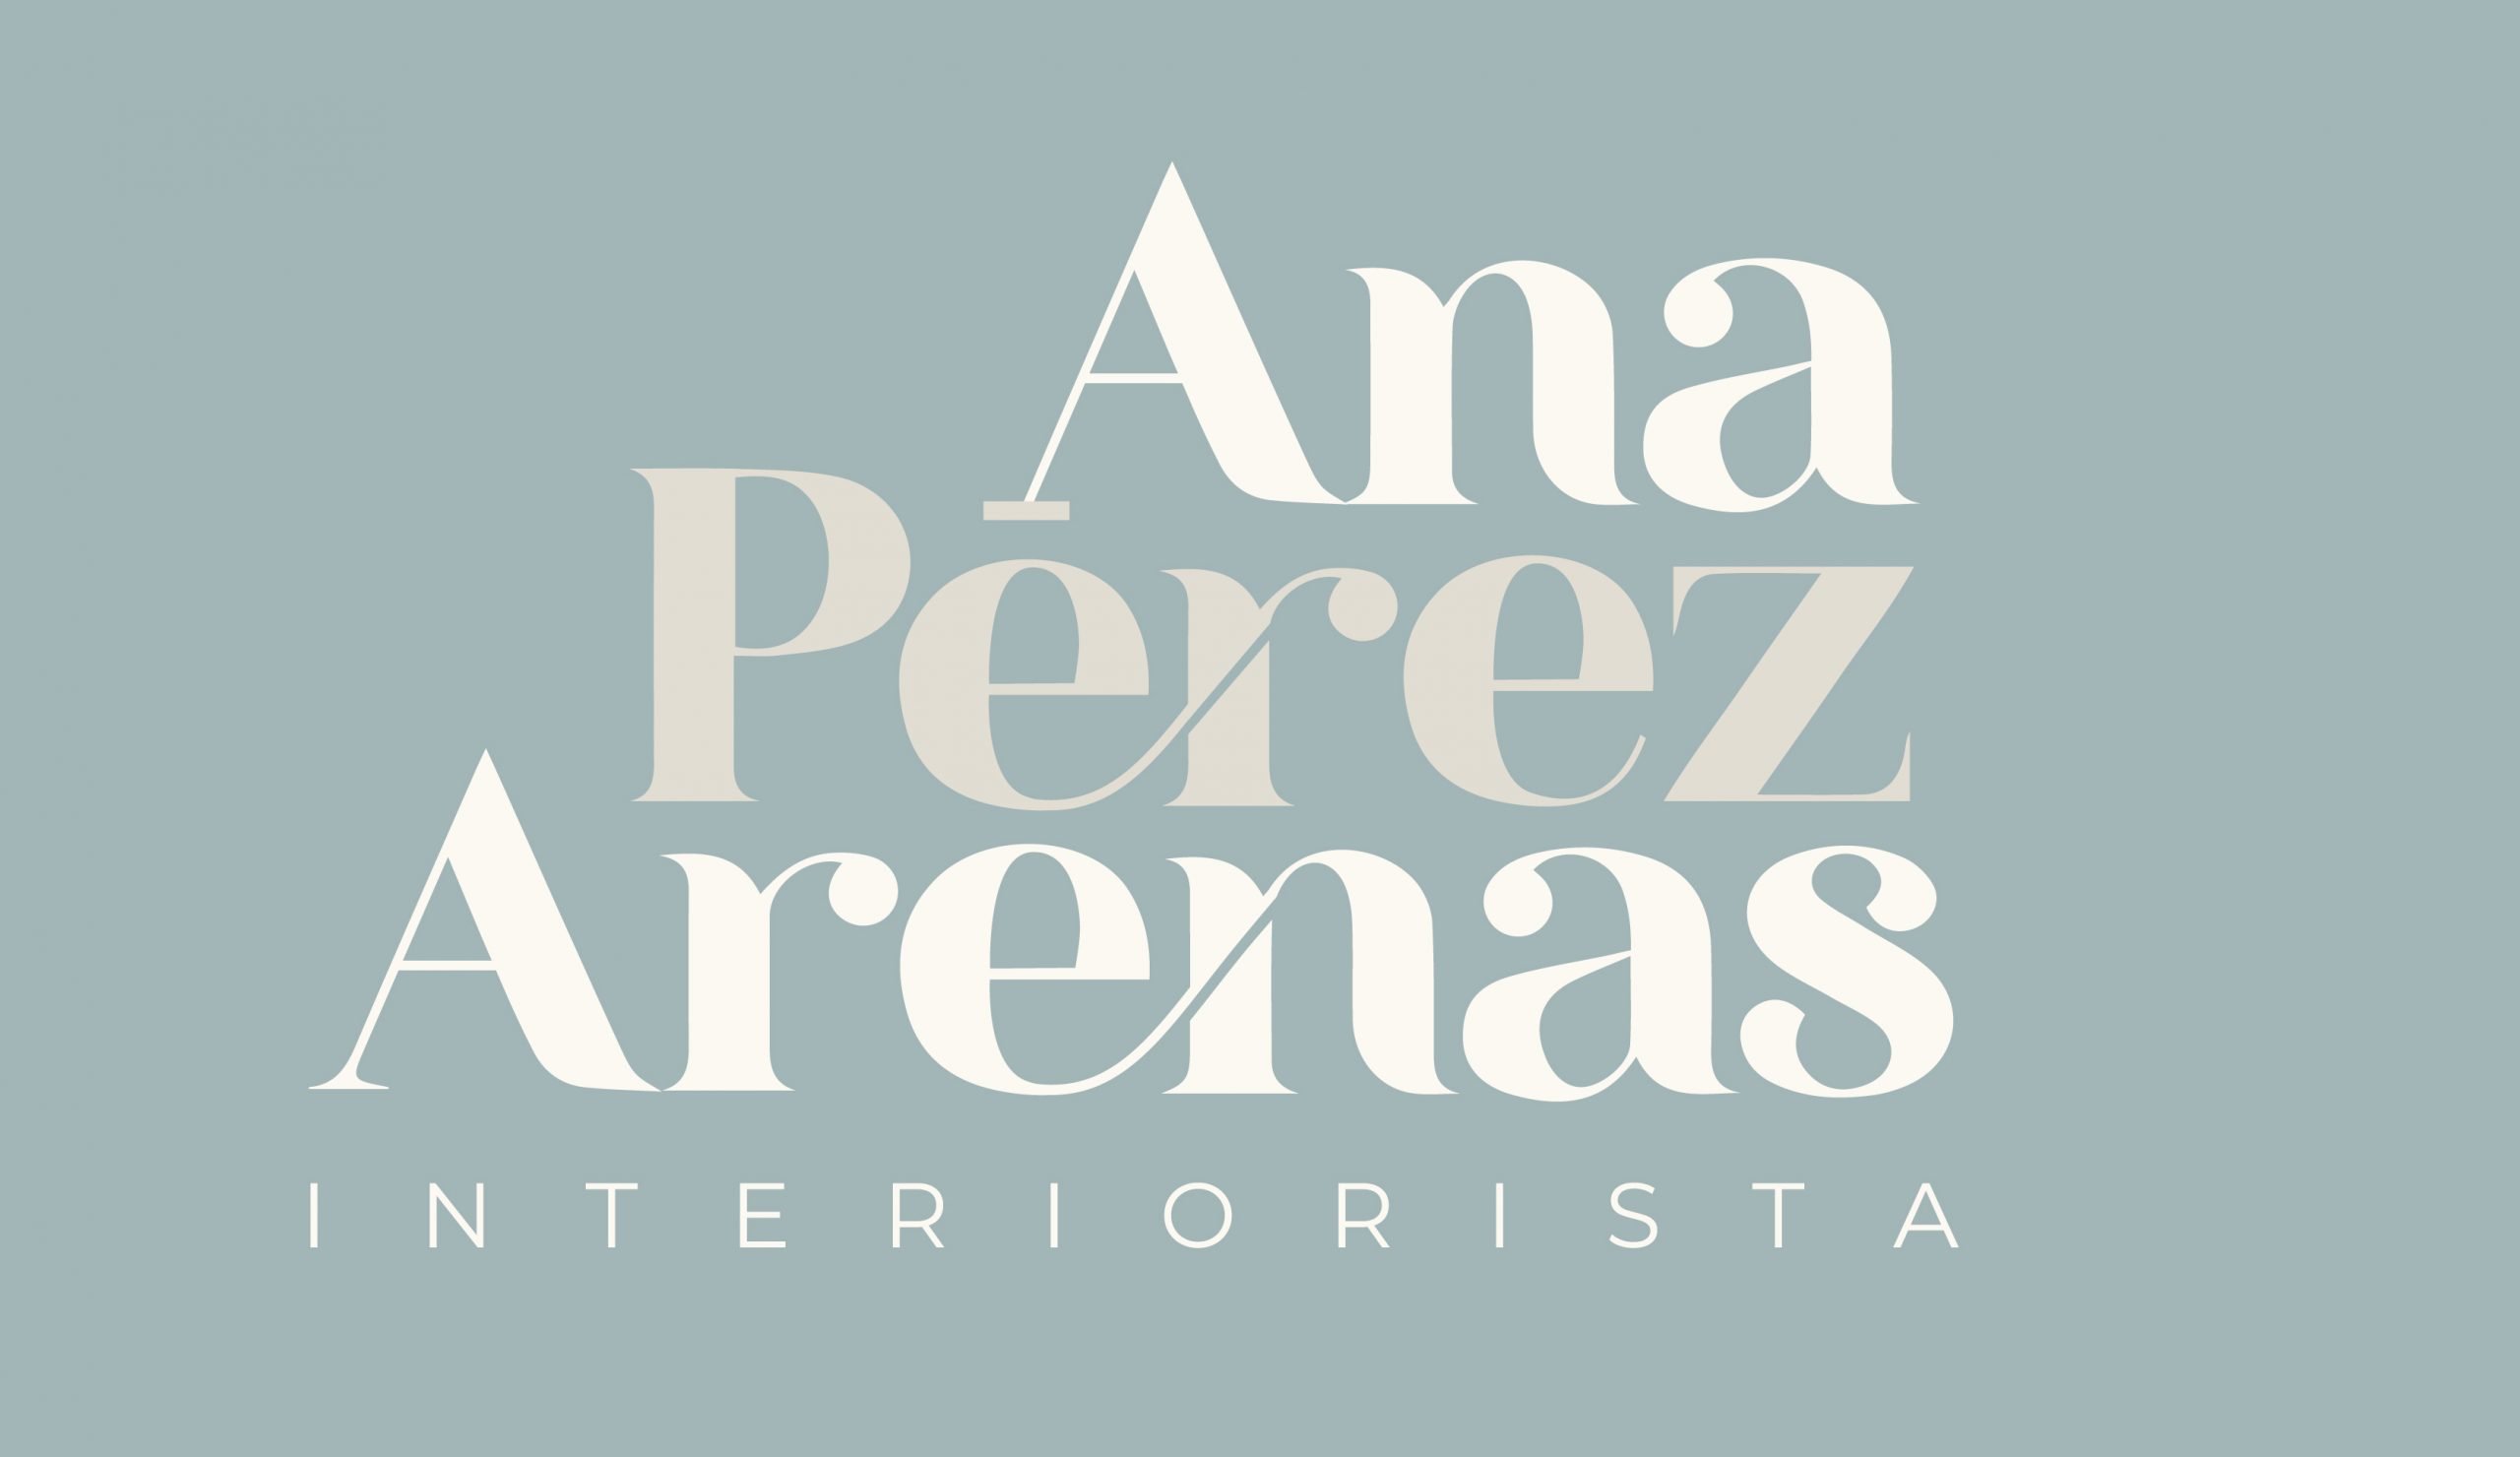 Ana Perez Arenas Interiorista